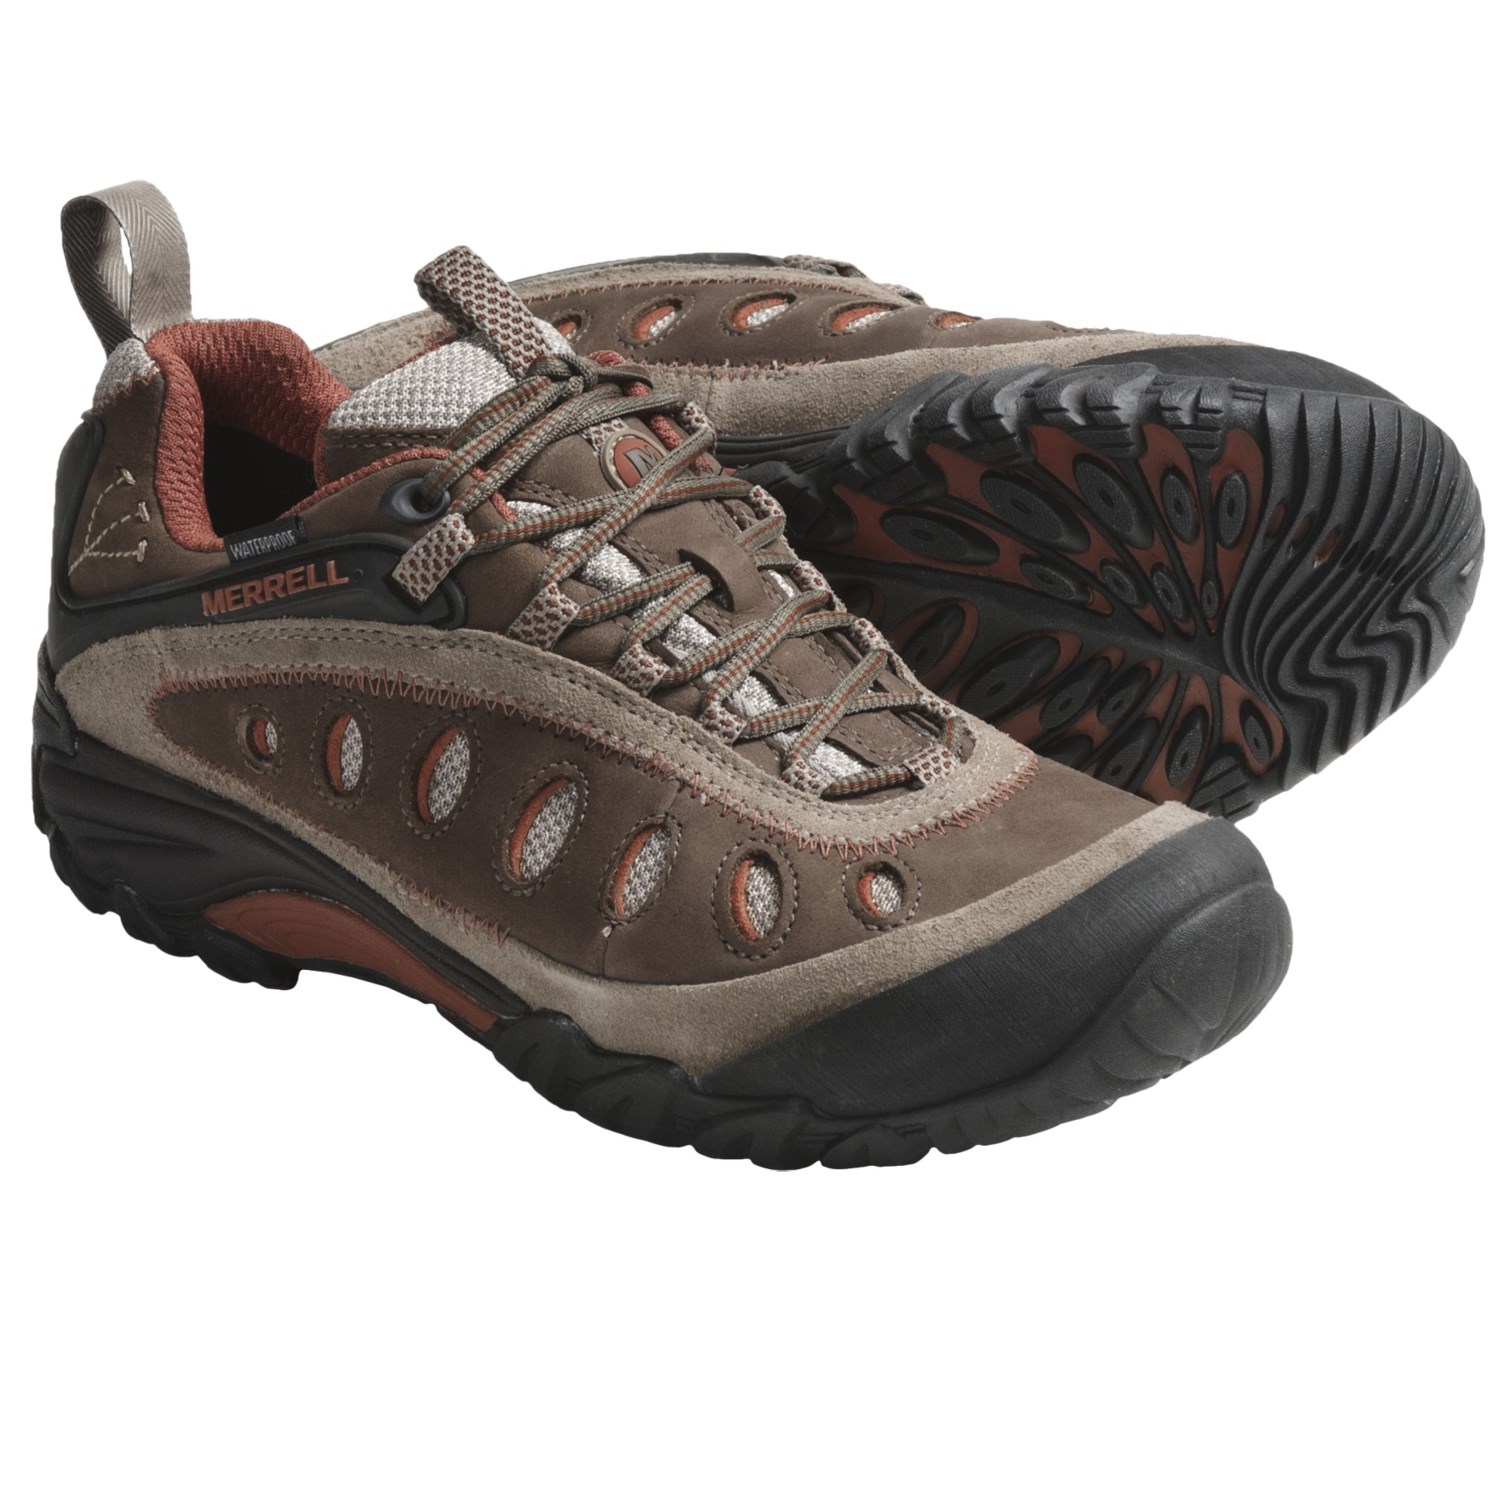 Merrell Chameleon Arc 2 Shoes - Waterproof (For Women) in StoneBombay ...